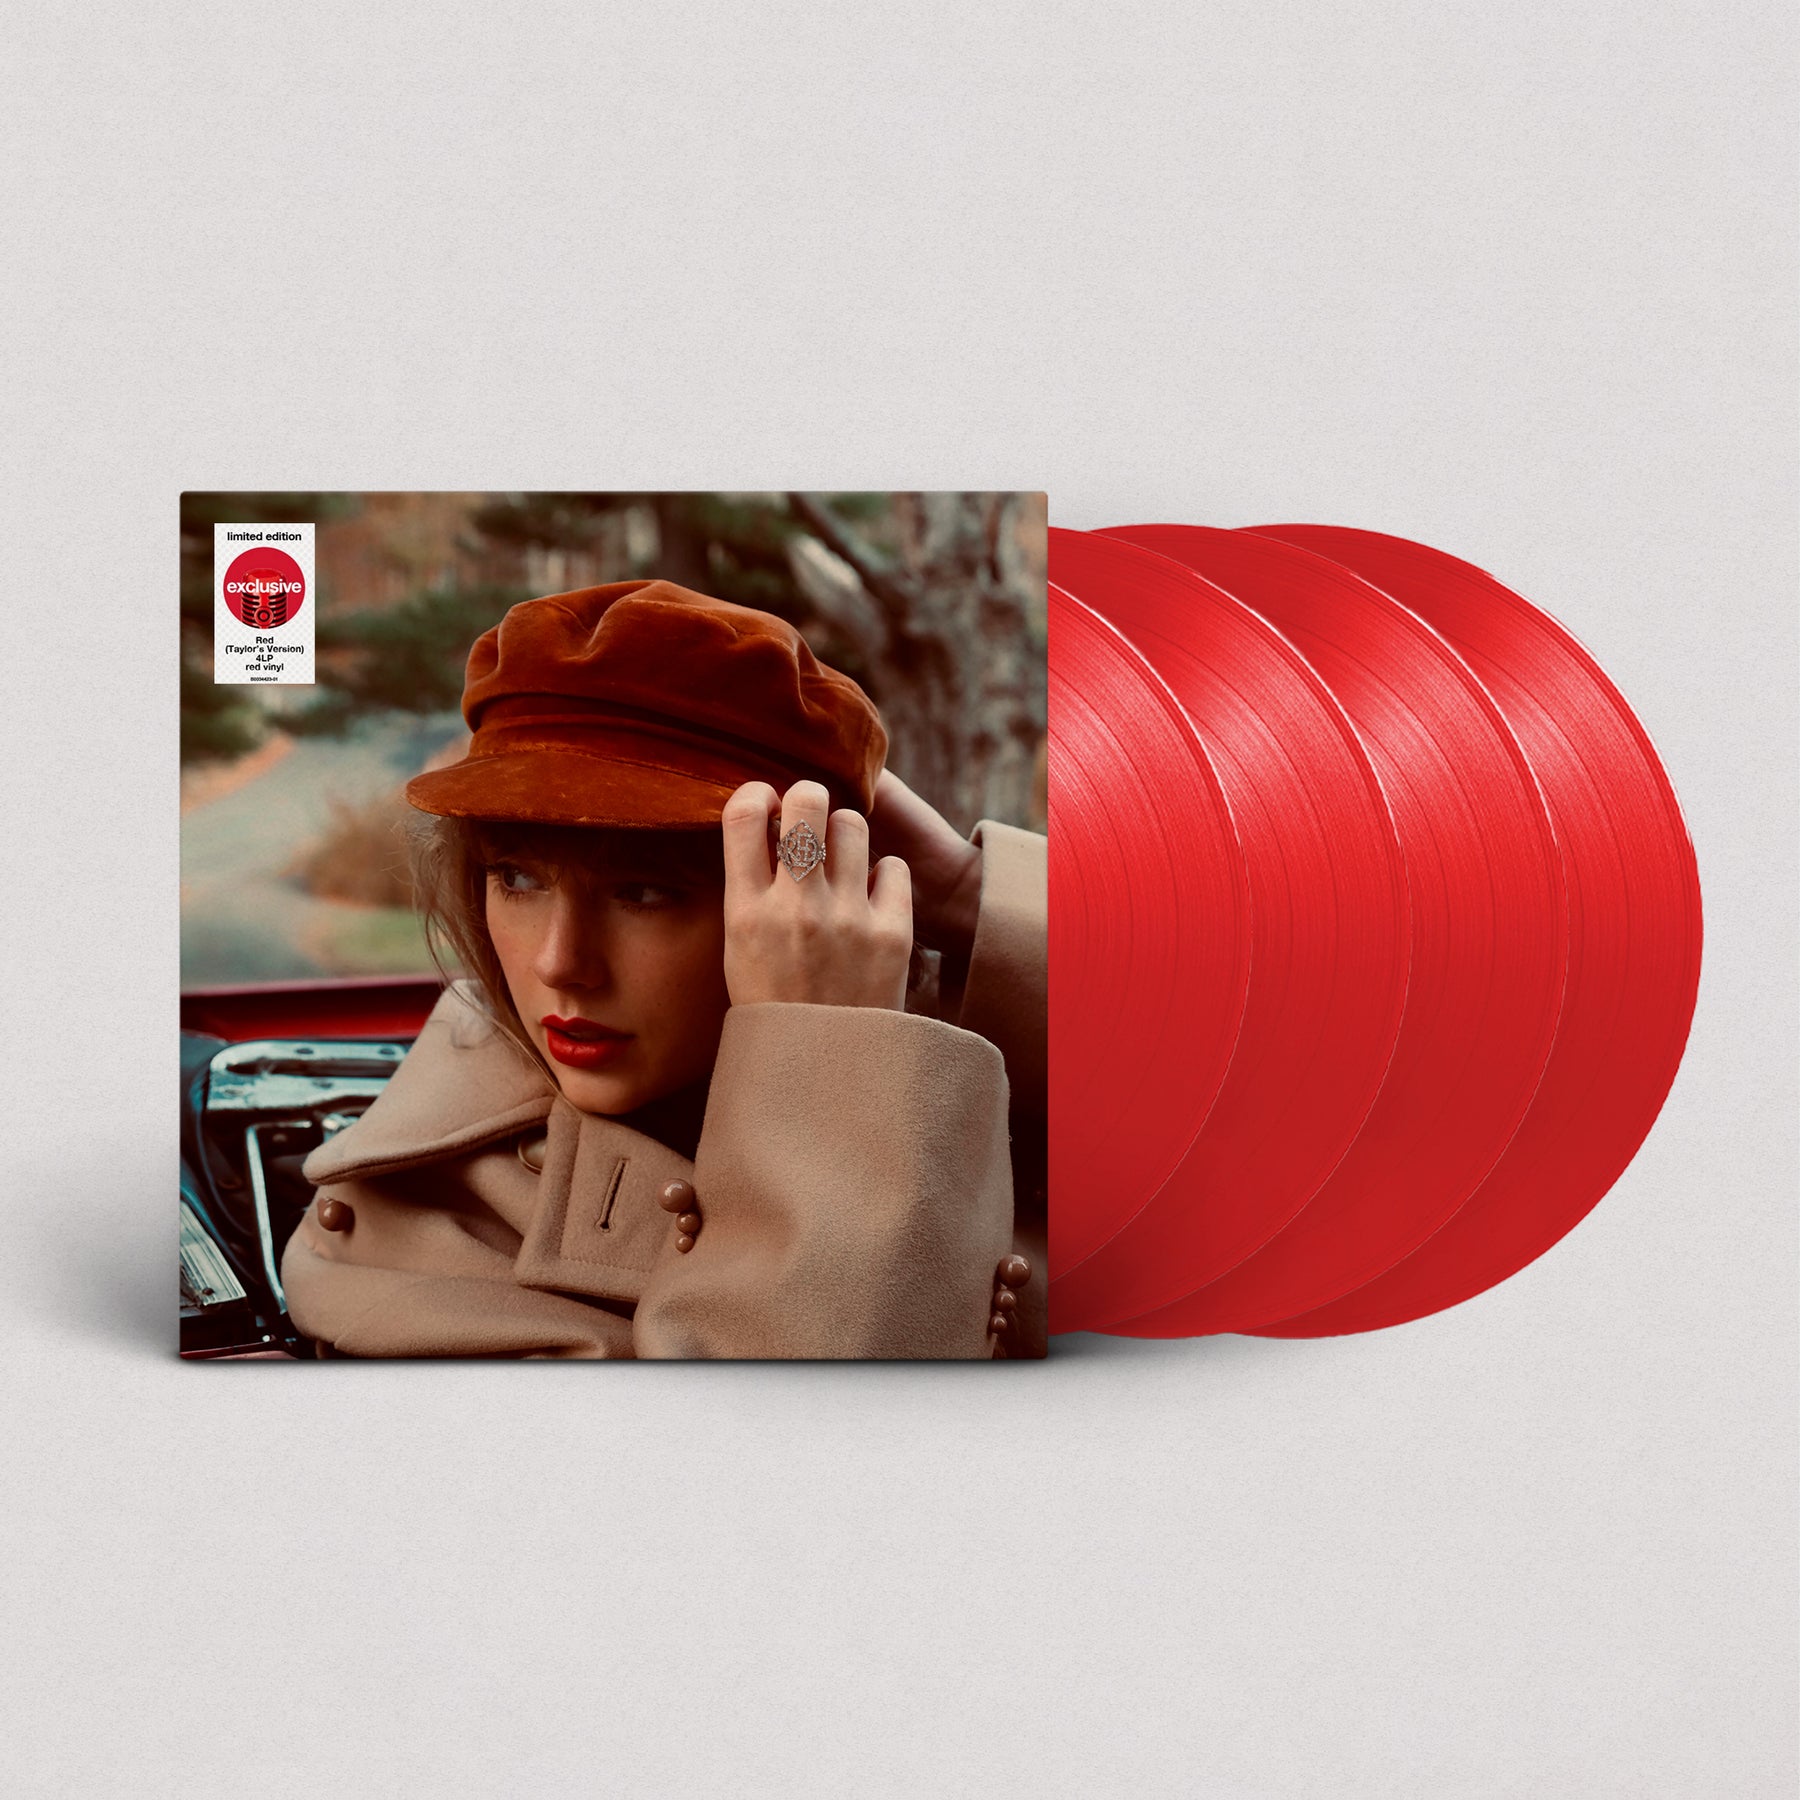 Taylor Swift - Red (Taylor's Version) (4LP) (Target Exclusive, Vinyl)